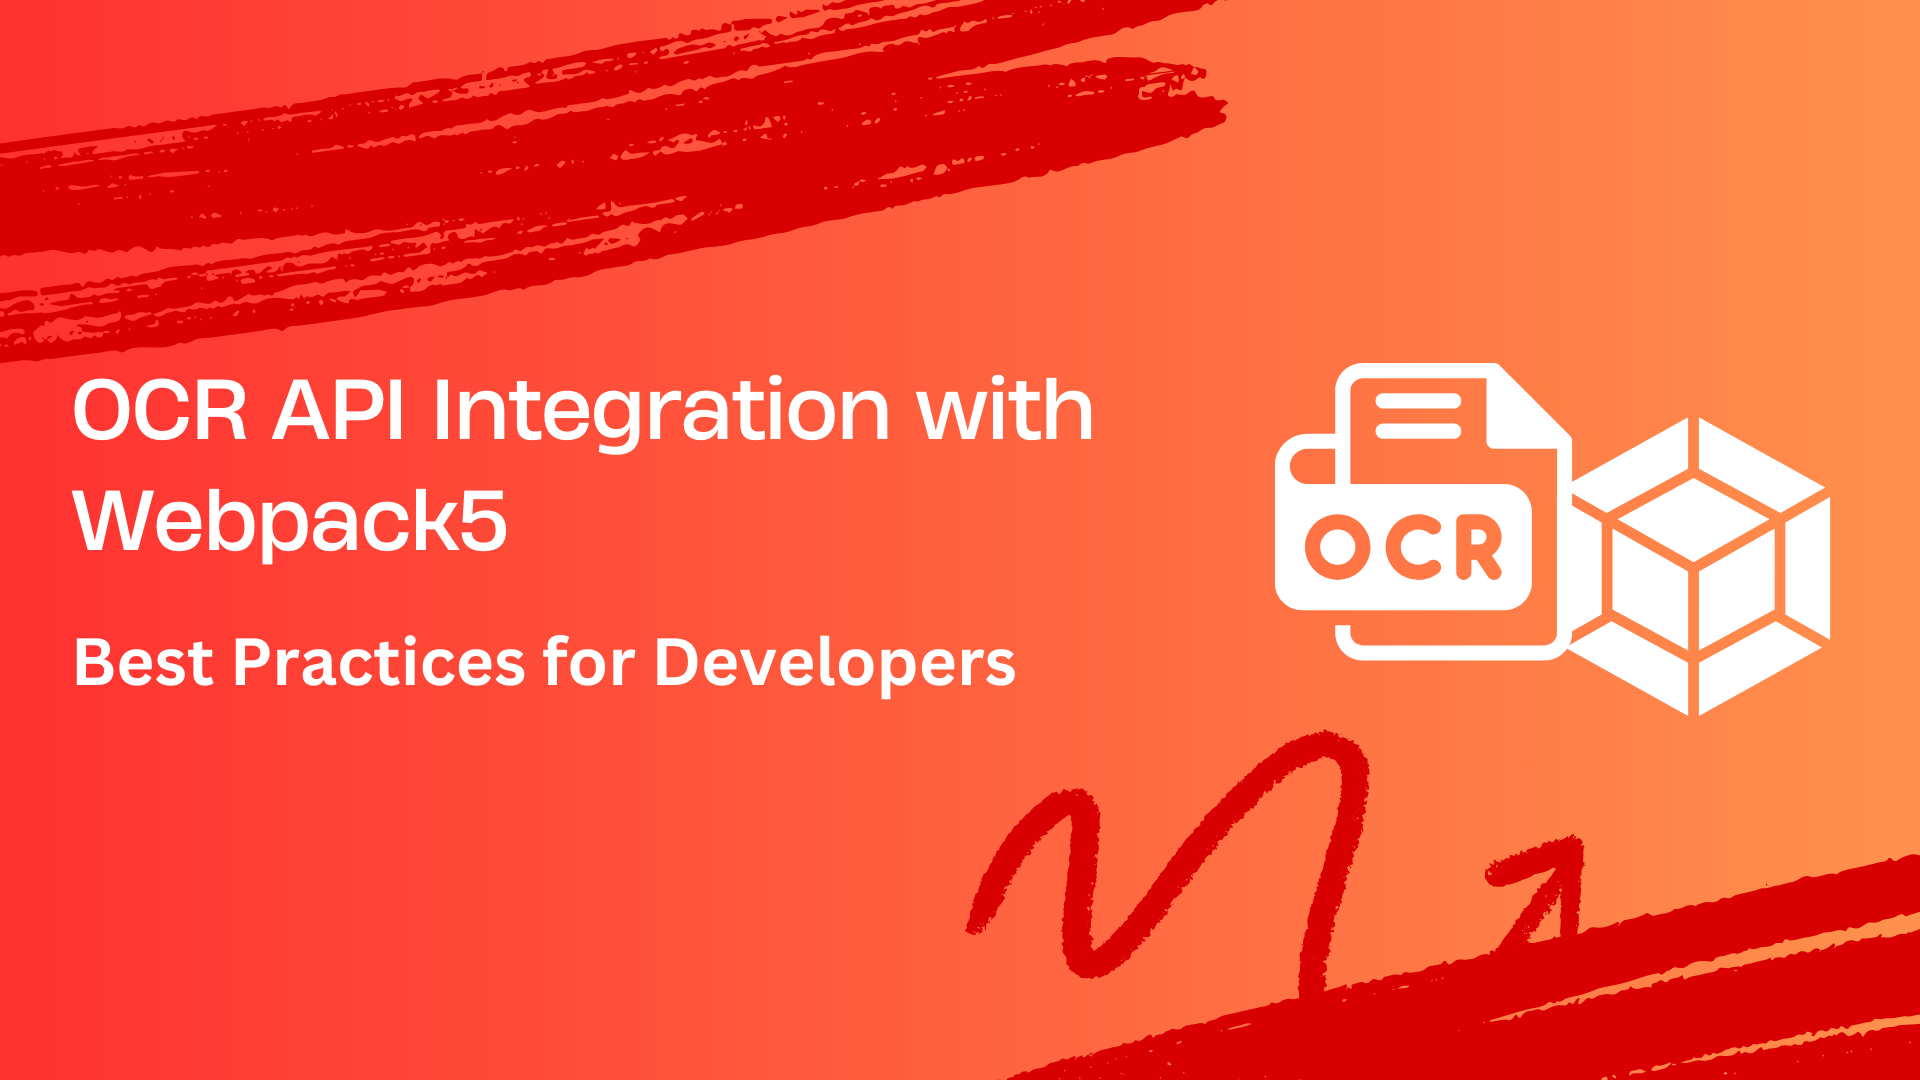 OCR API Integration with Webpack5 - Best Practices for Developers